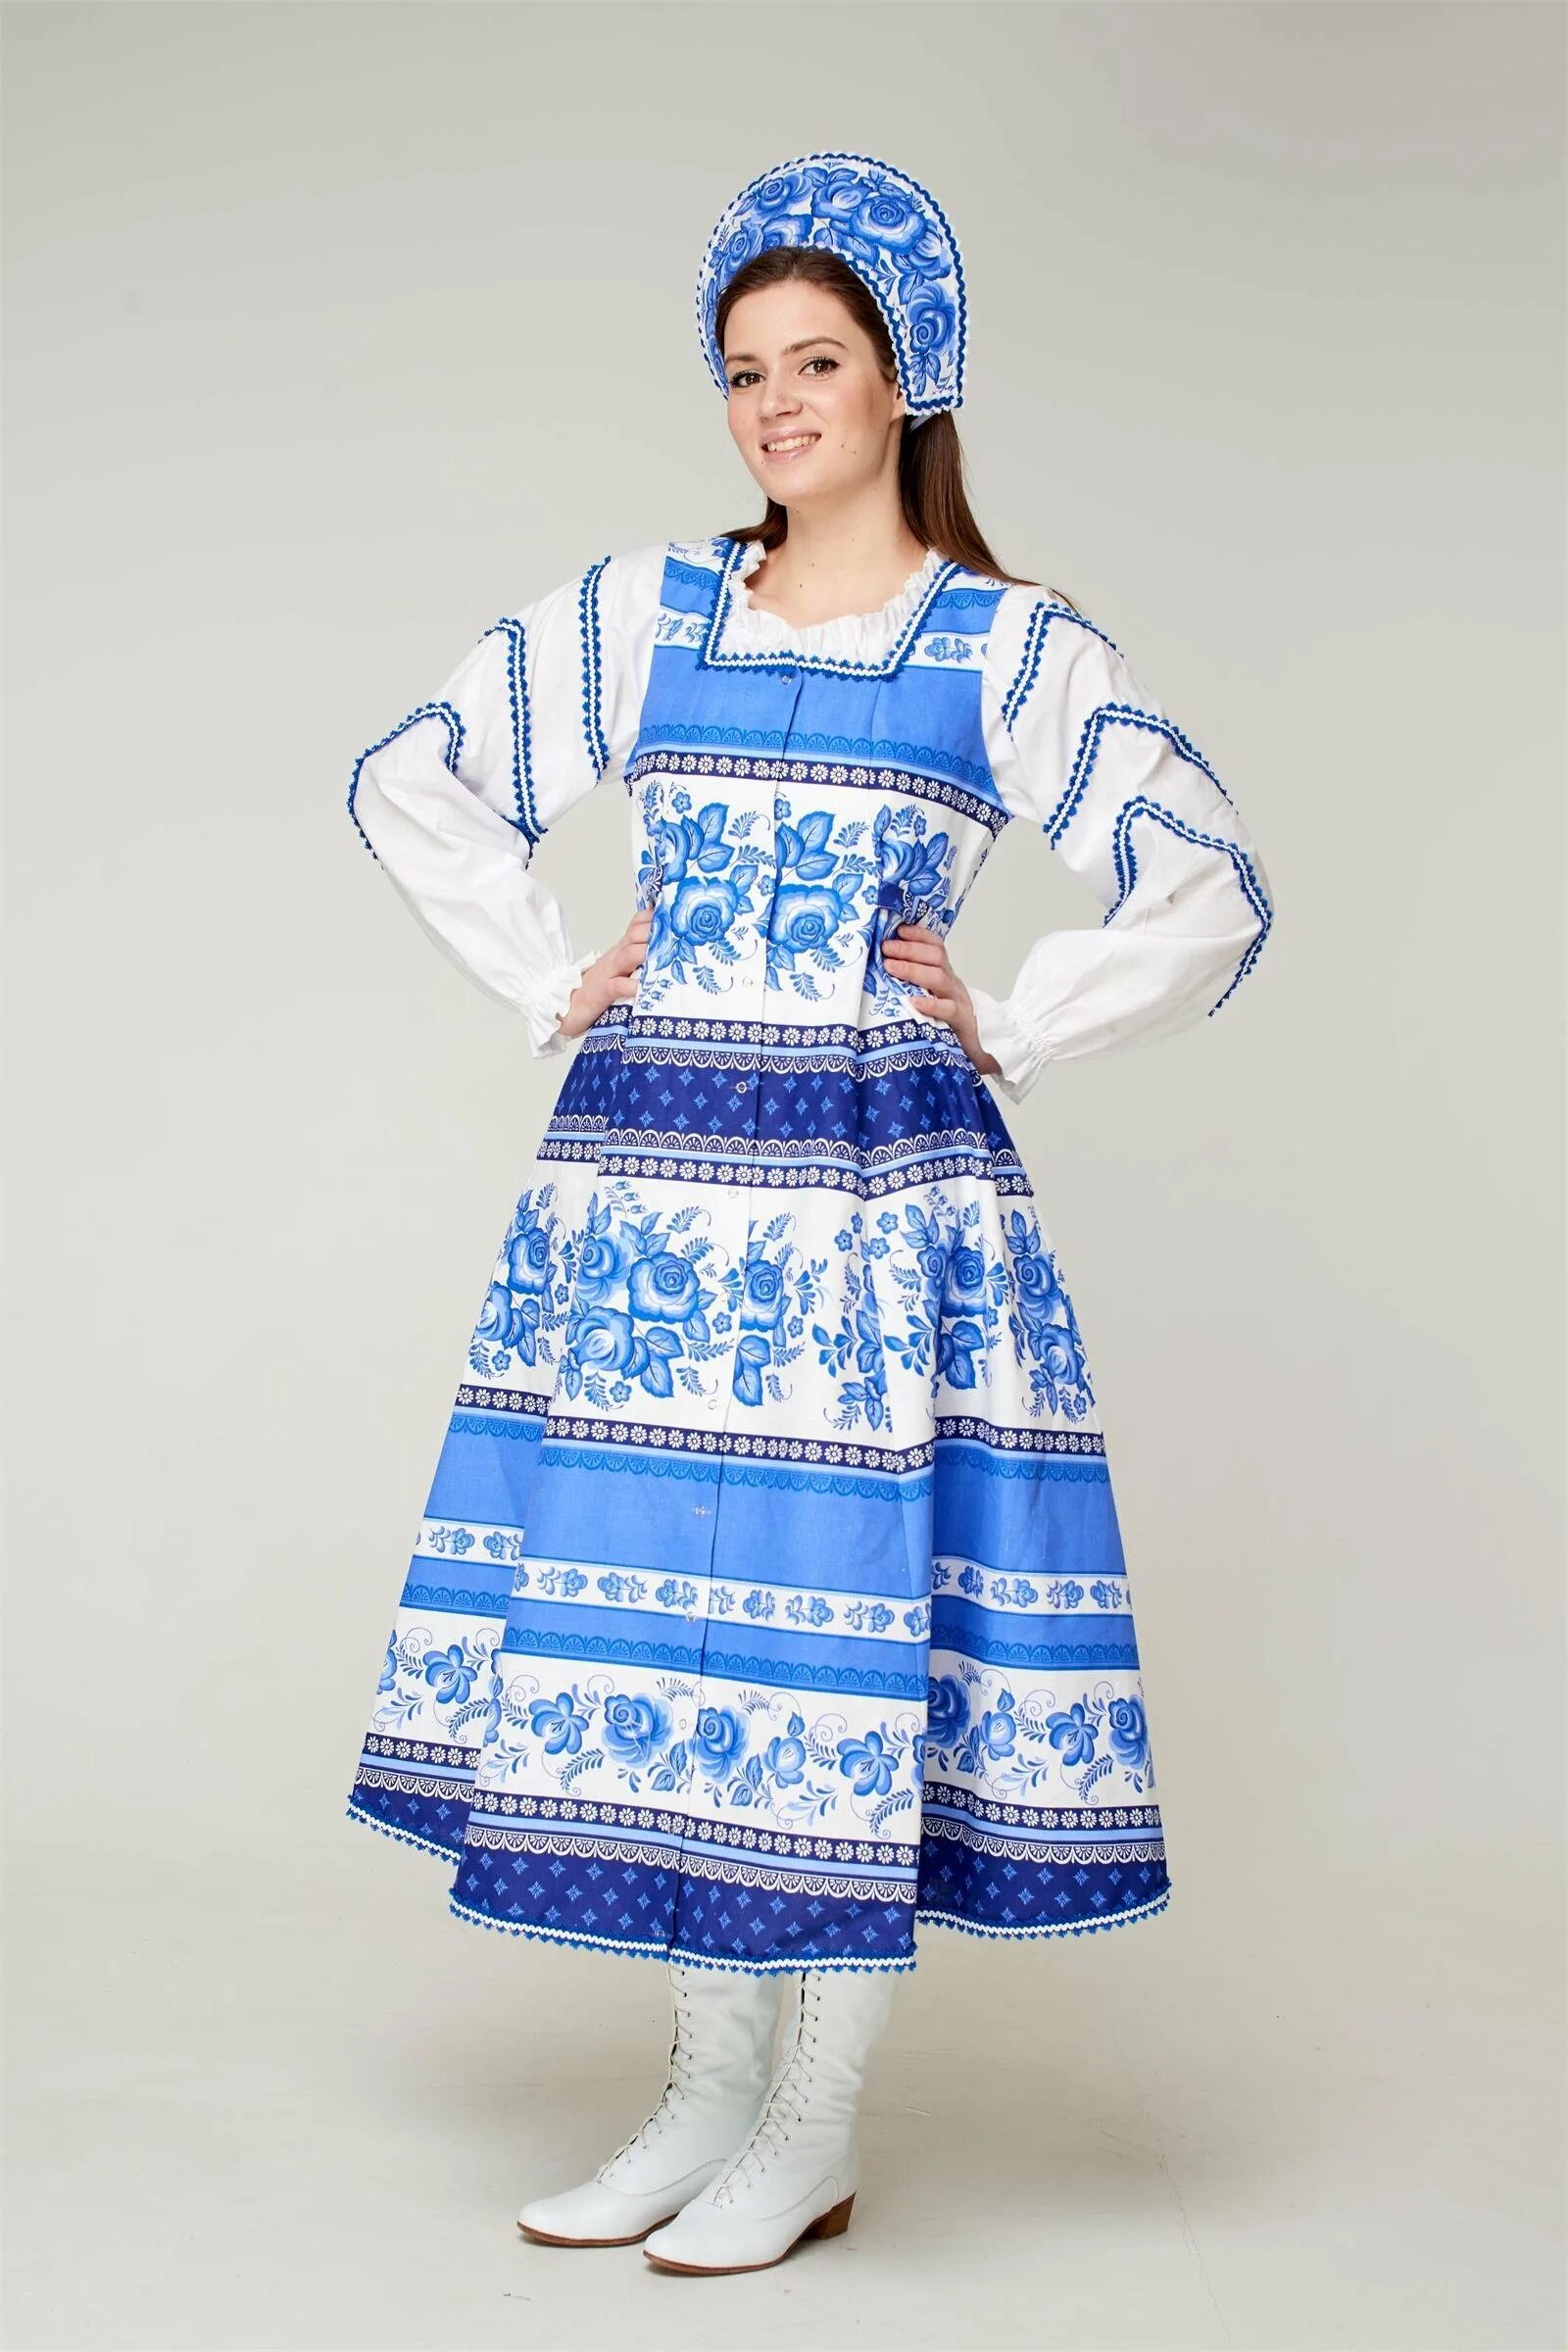 Сарафан Гжель валберис. Сарафан в народном стиле. Русский костюм женский. Фольклорный костюм женский.